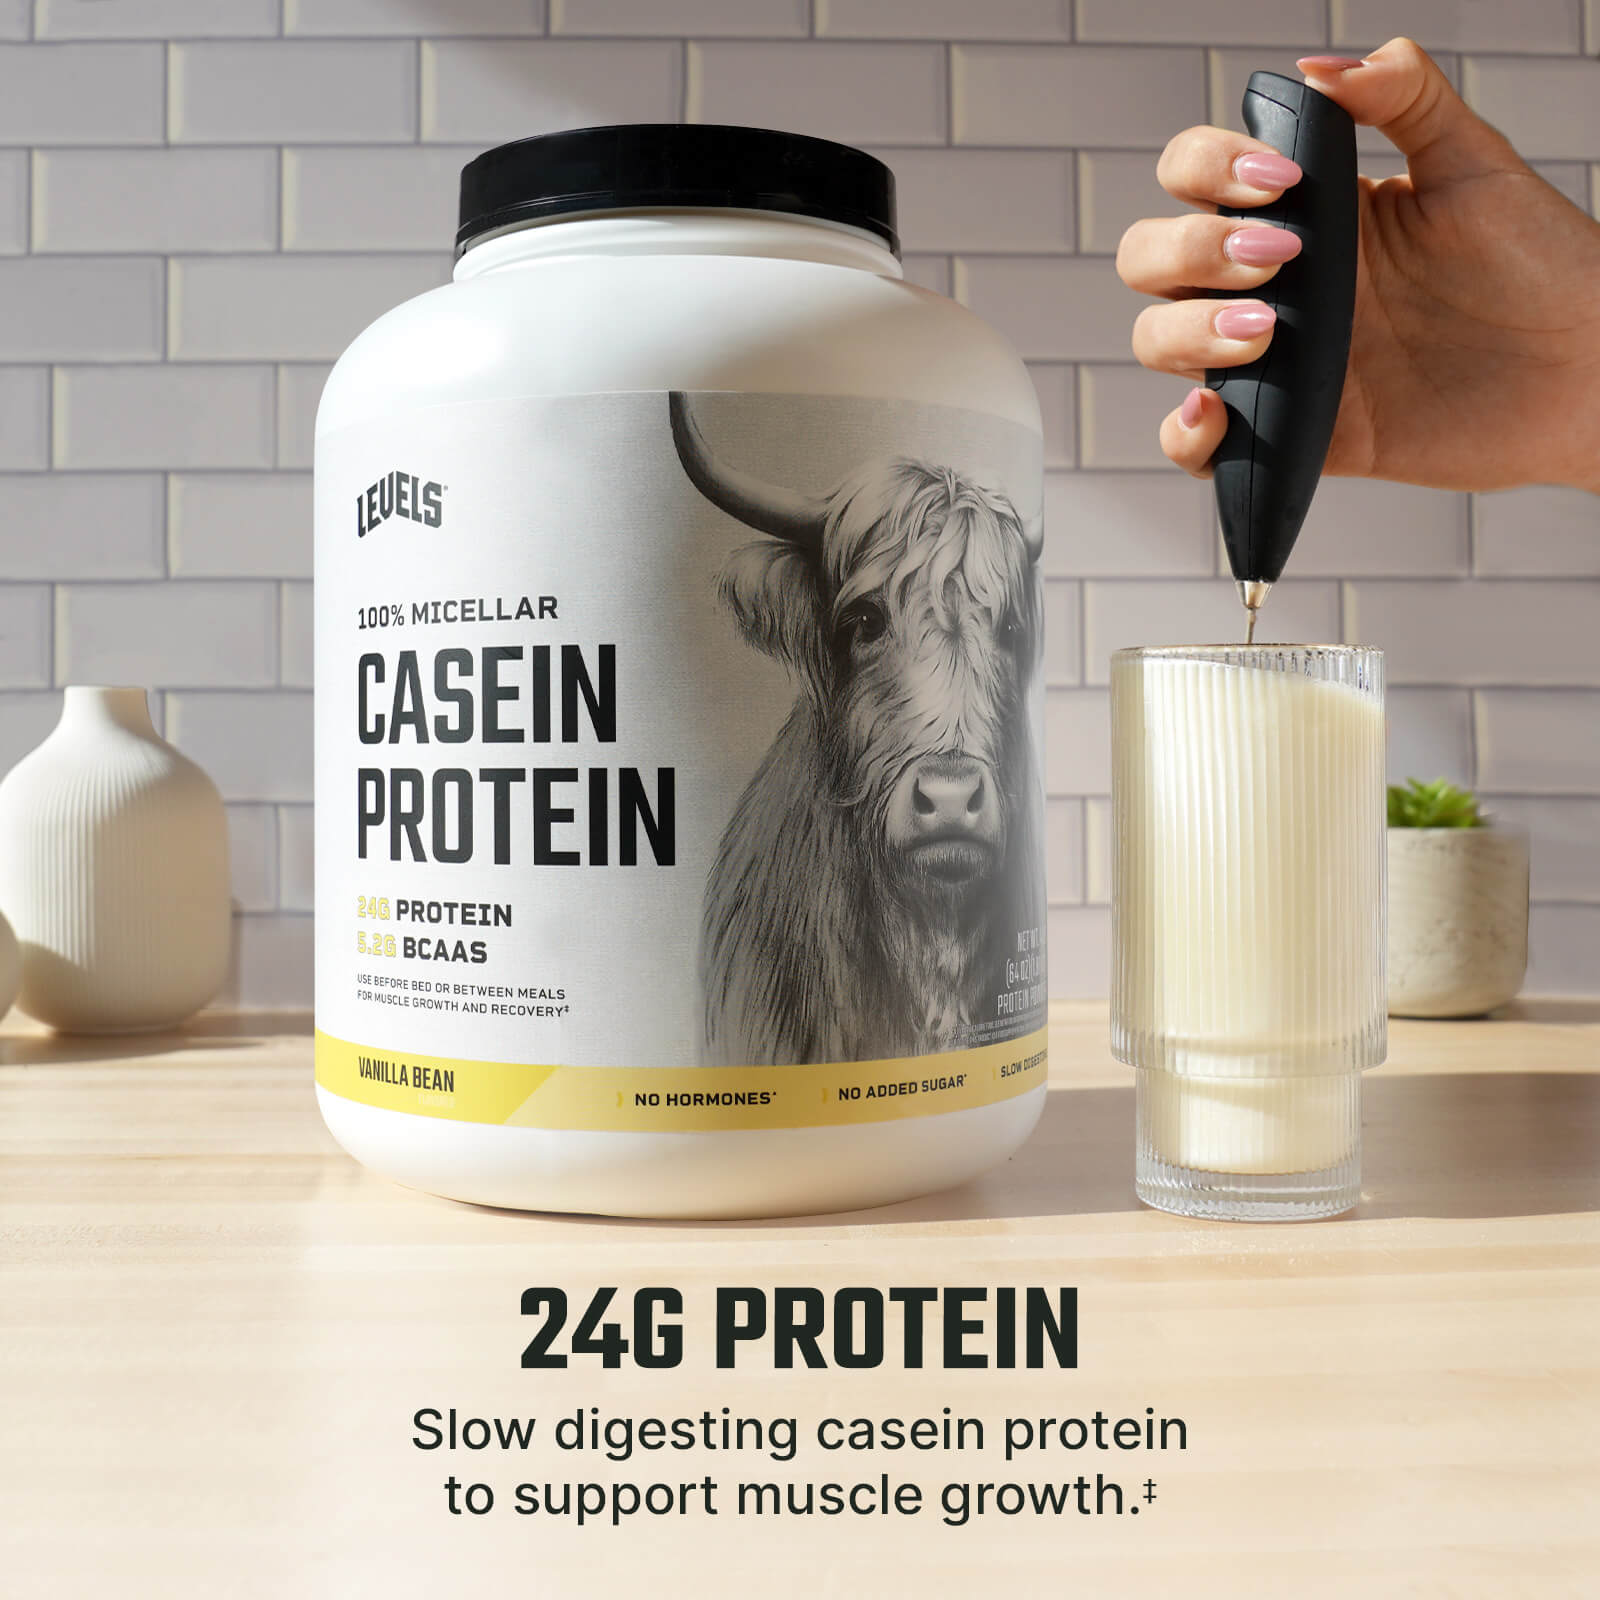 Vanilla Bean Micellar Casein Protein, Hormone-Free, 2LB